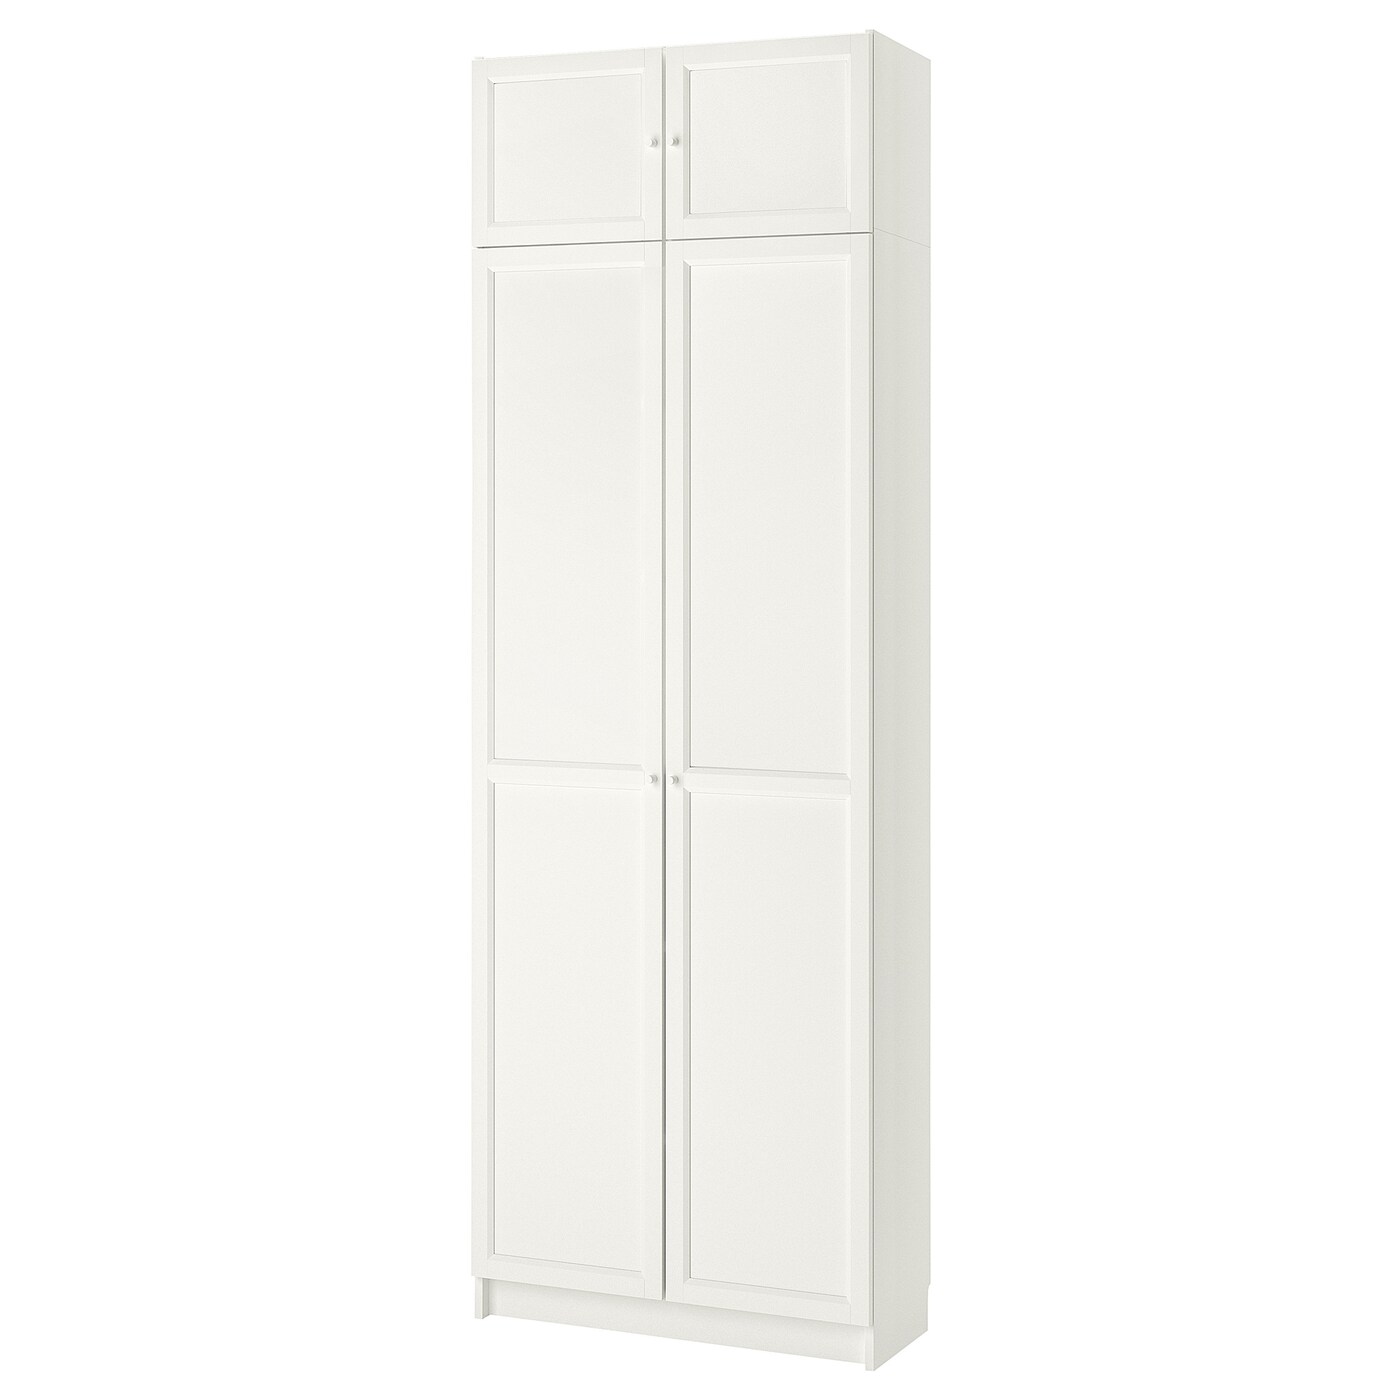 Книжный шкаф с дверцей - BILLY/OXBERG IKEA/ БИЛЛИ/ОКСБЕРГ ИКЕА, 30х80х237 см, белый